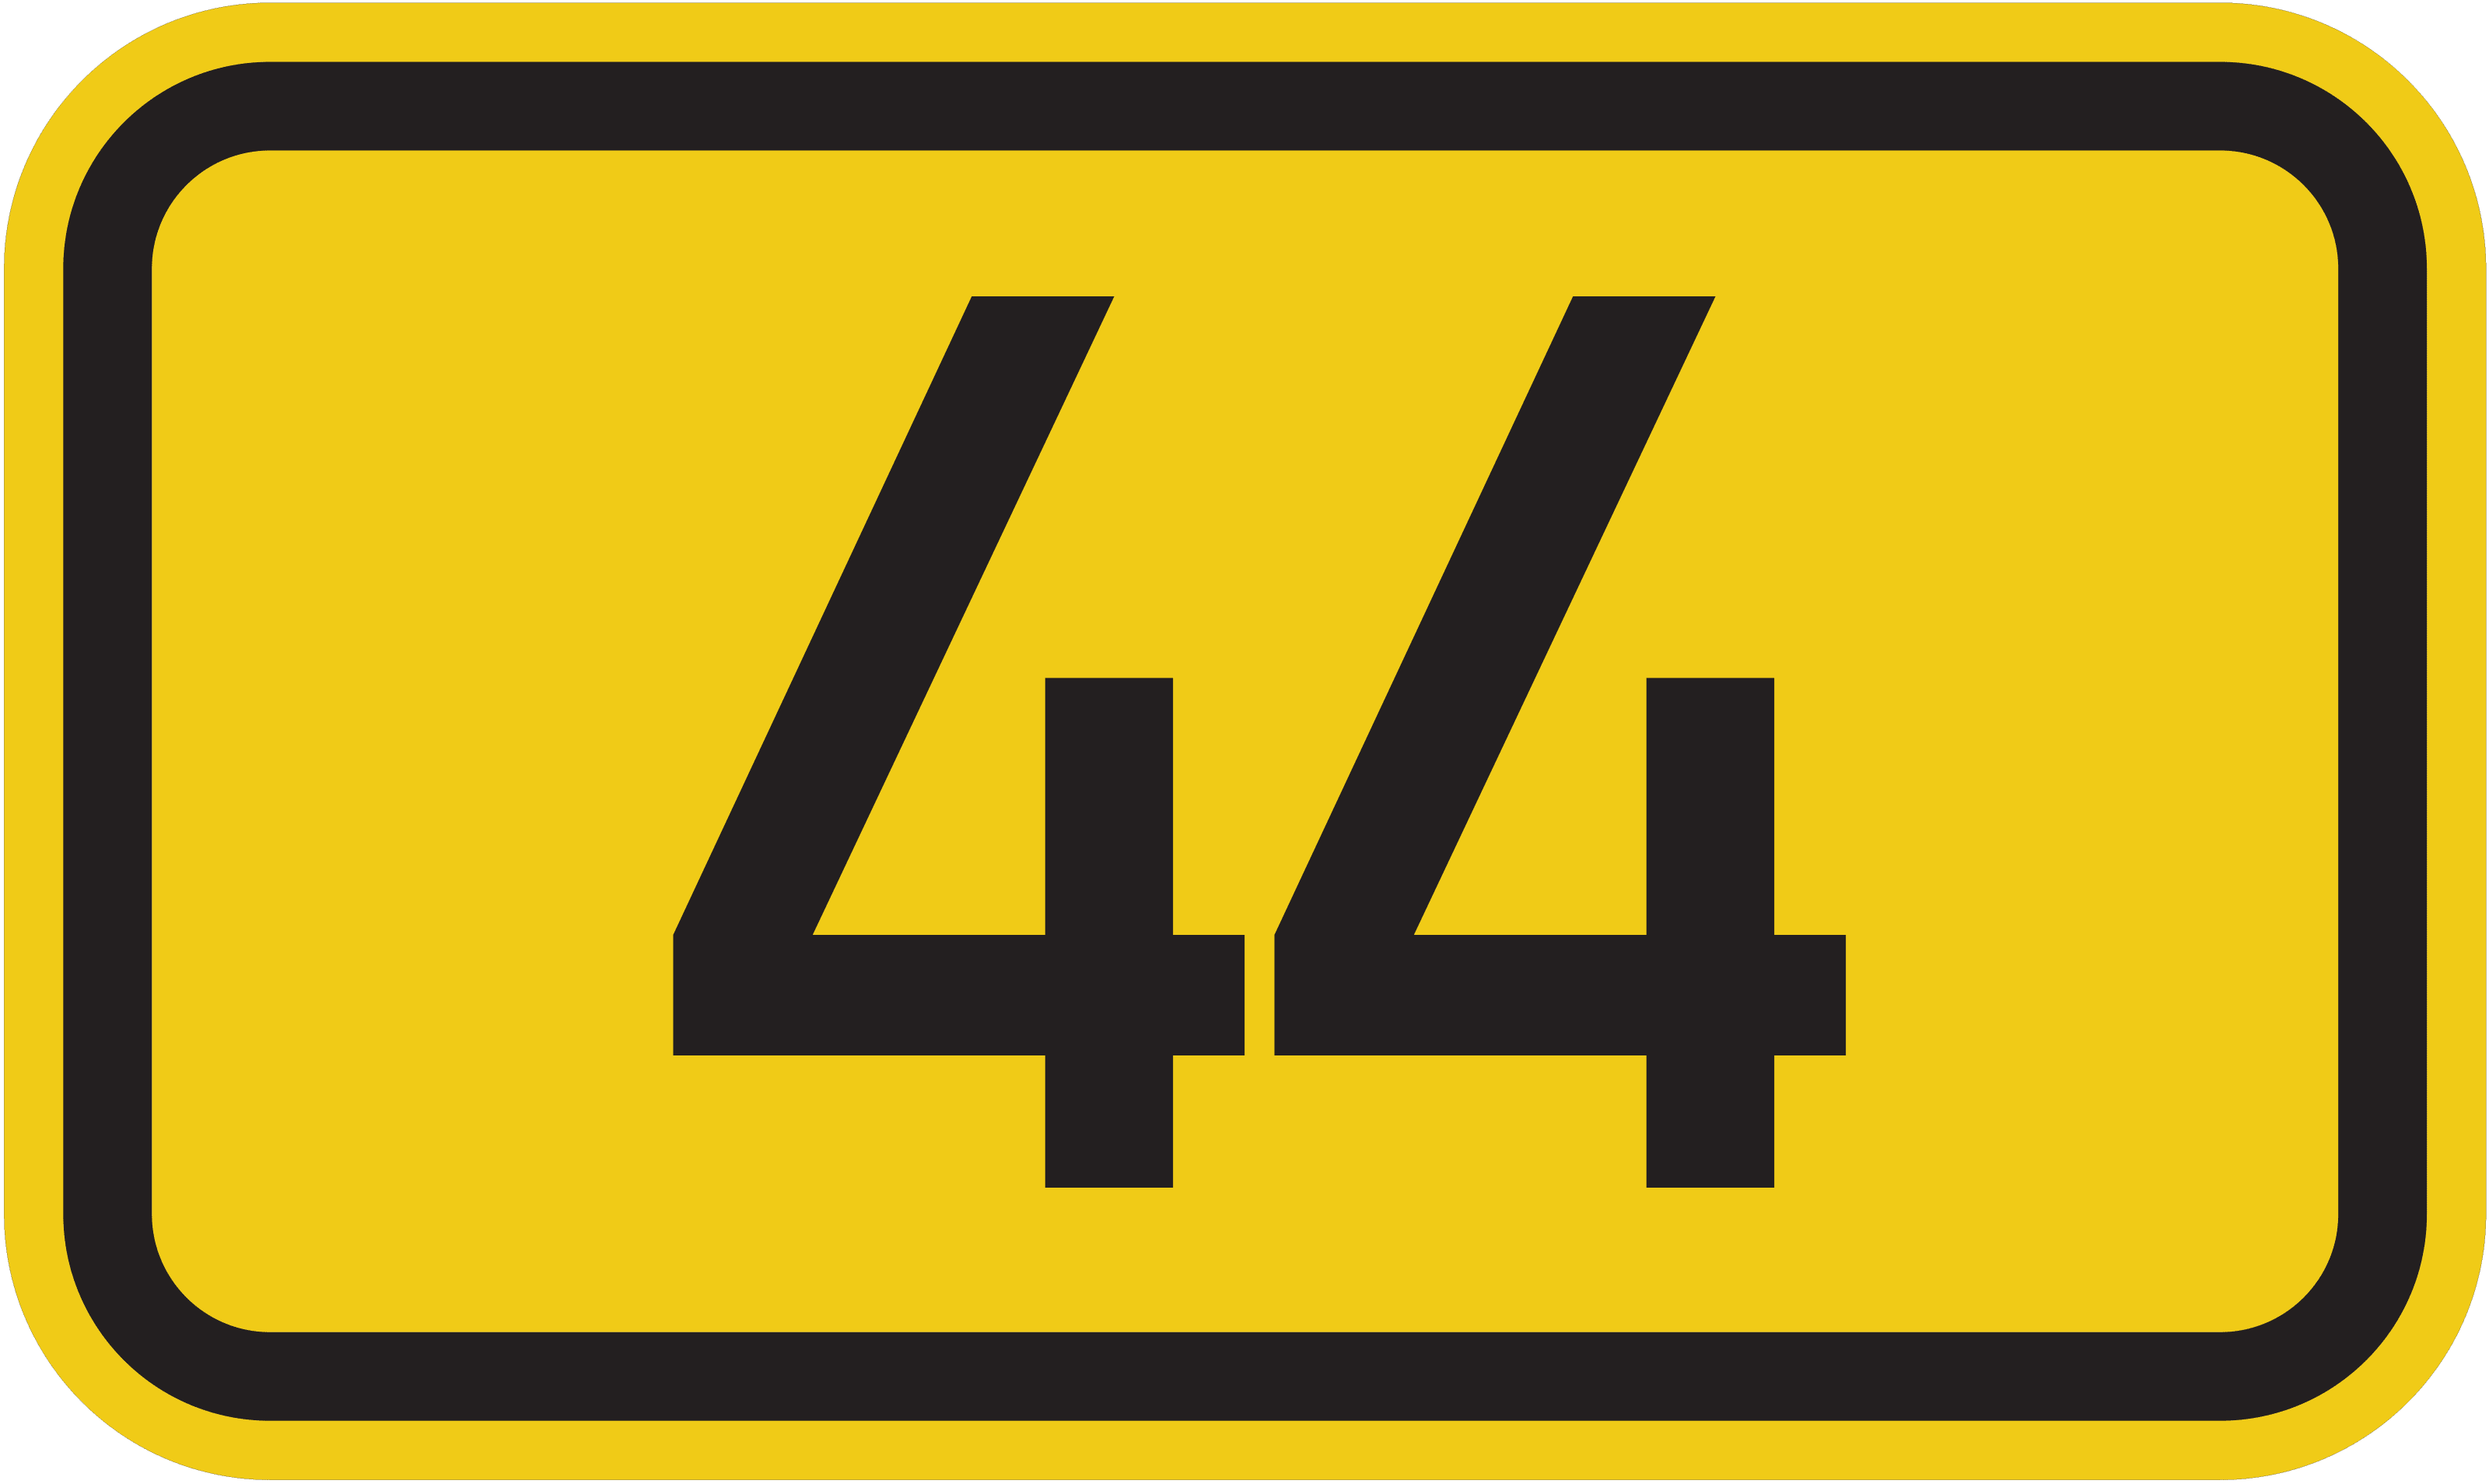 Straßenschild Bundesstraße 44